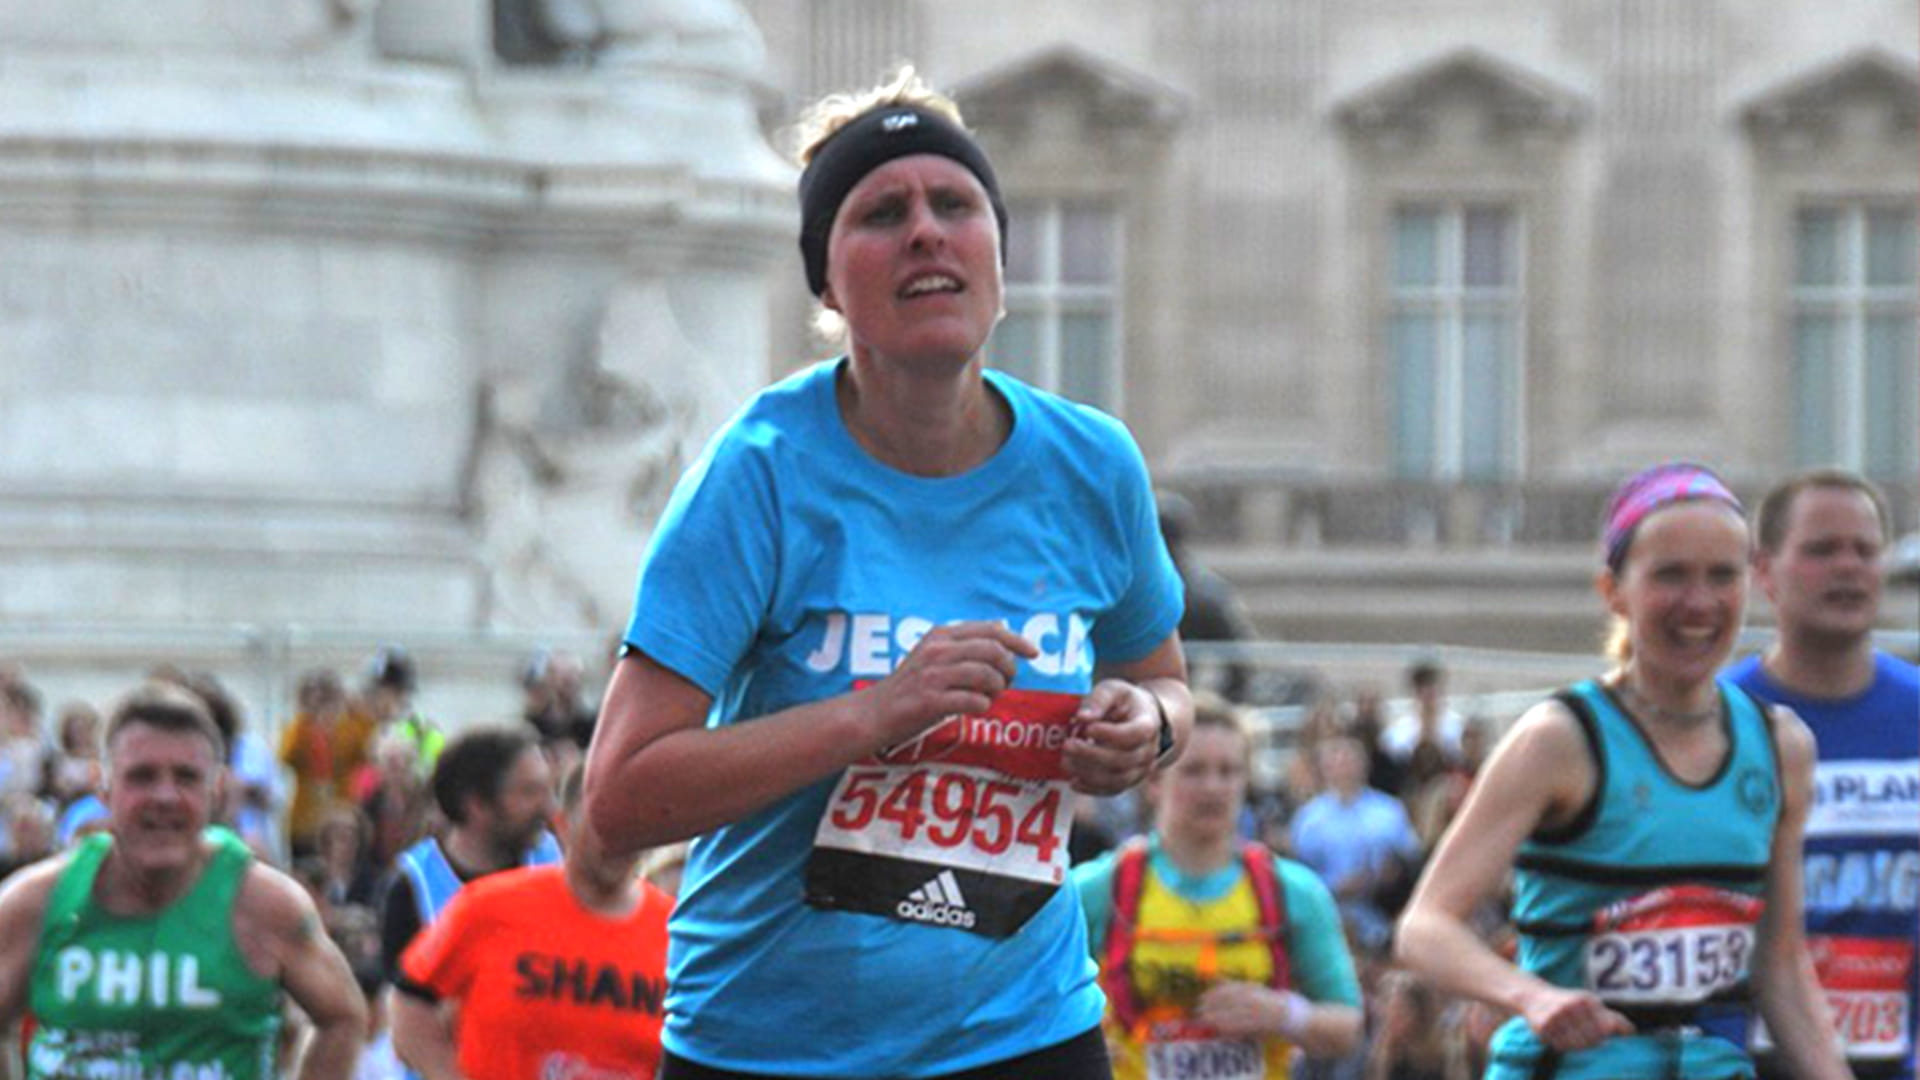 Jessica- Hepburn just about to finish the London Marathon